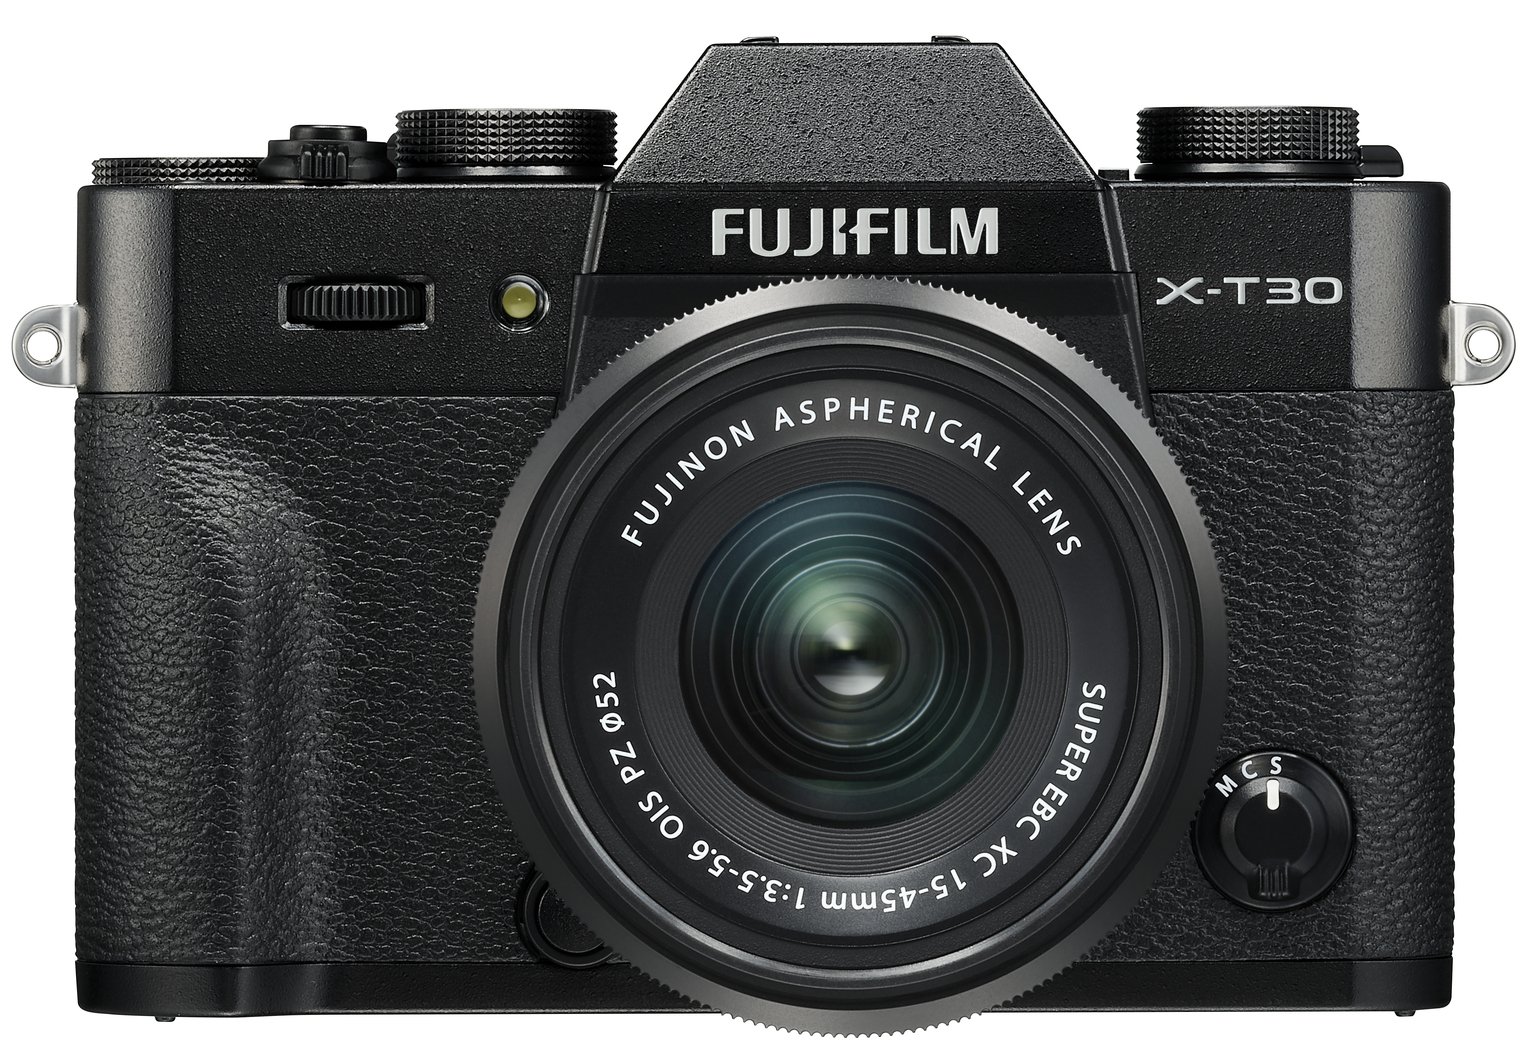 Fujifilm X-T30 Digital Camera with 15-45mm Lens - Black